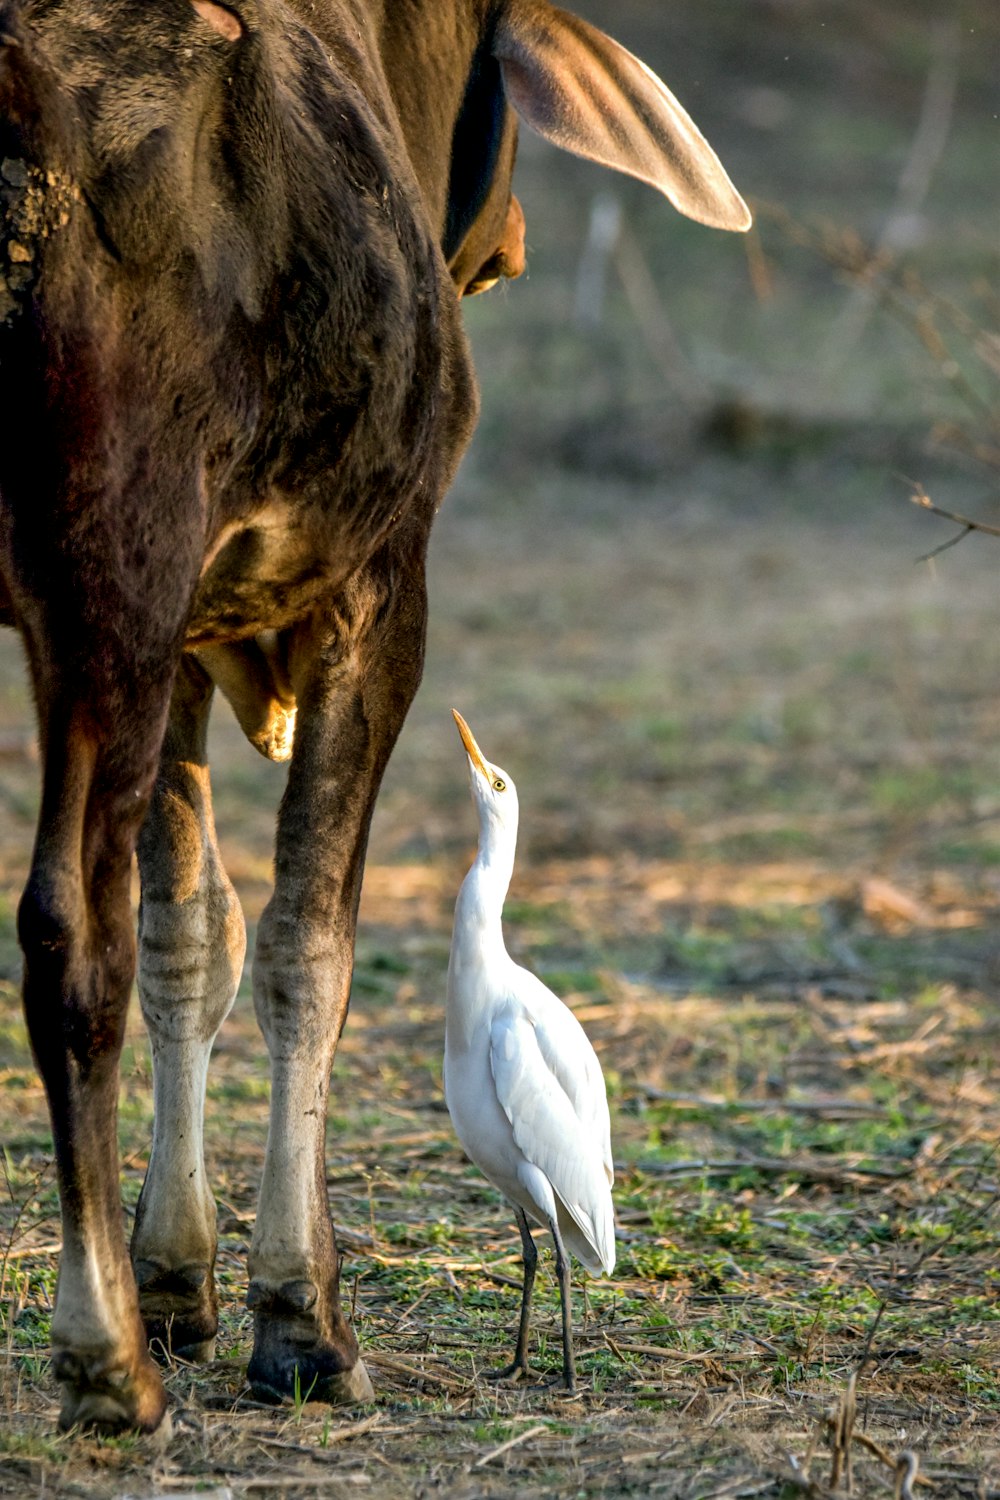 a white bird standing next to a cow